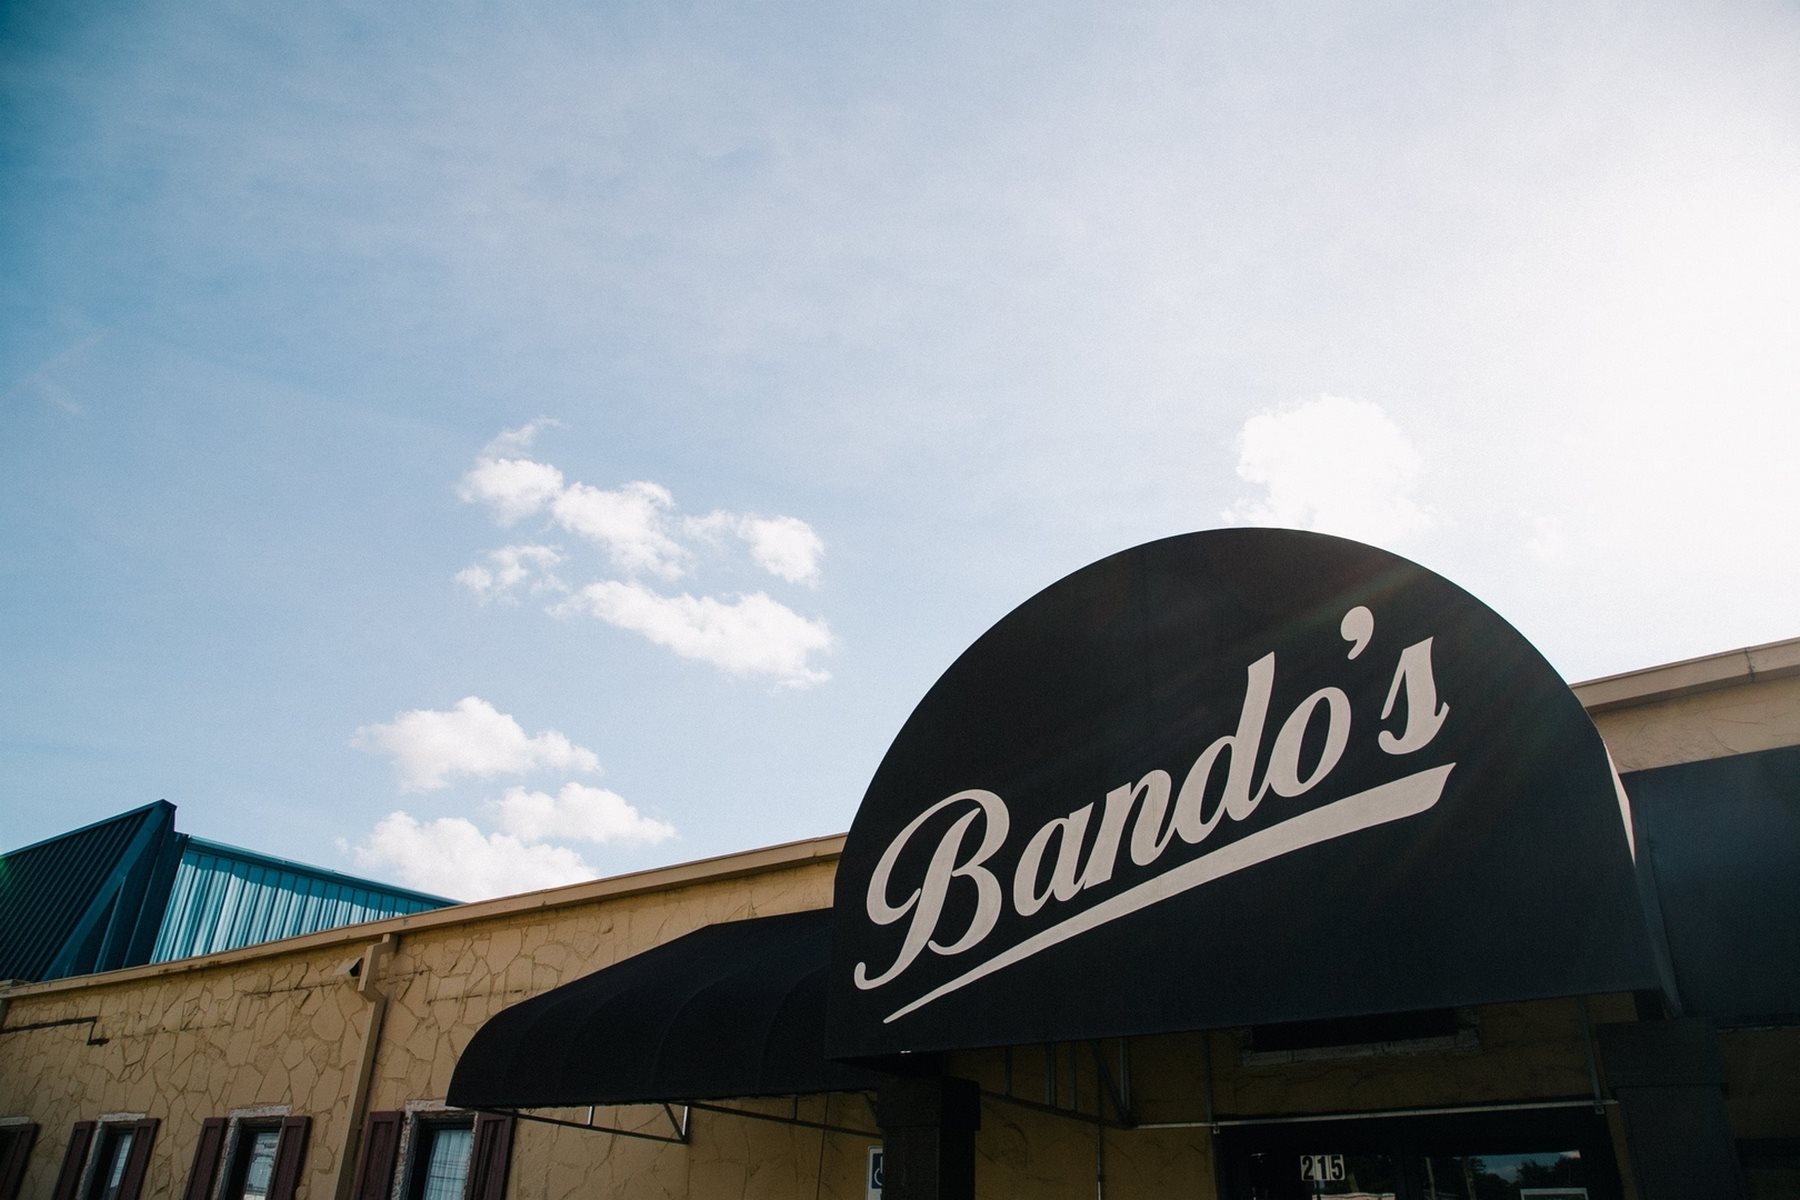 Bando's Beaumont Gift Shops